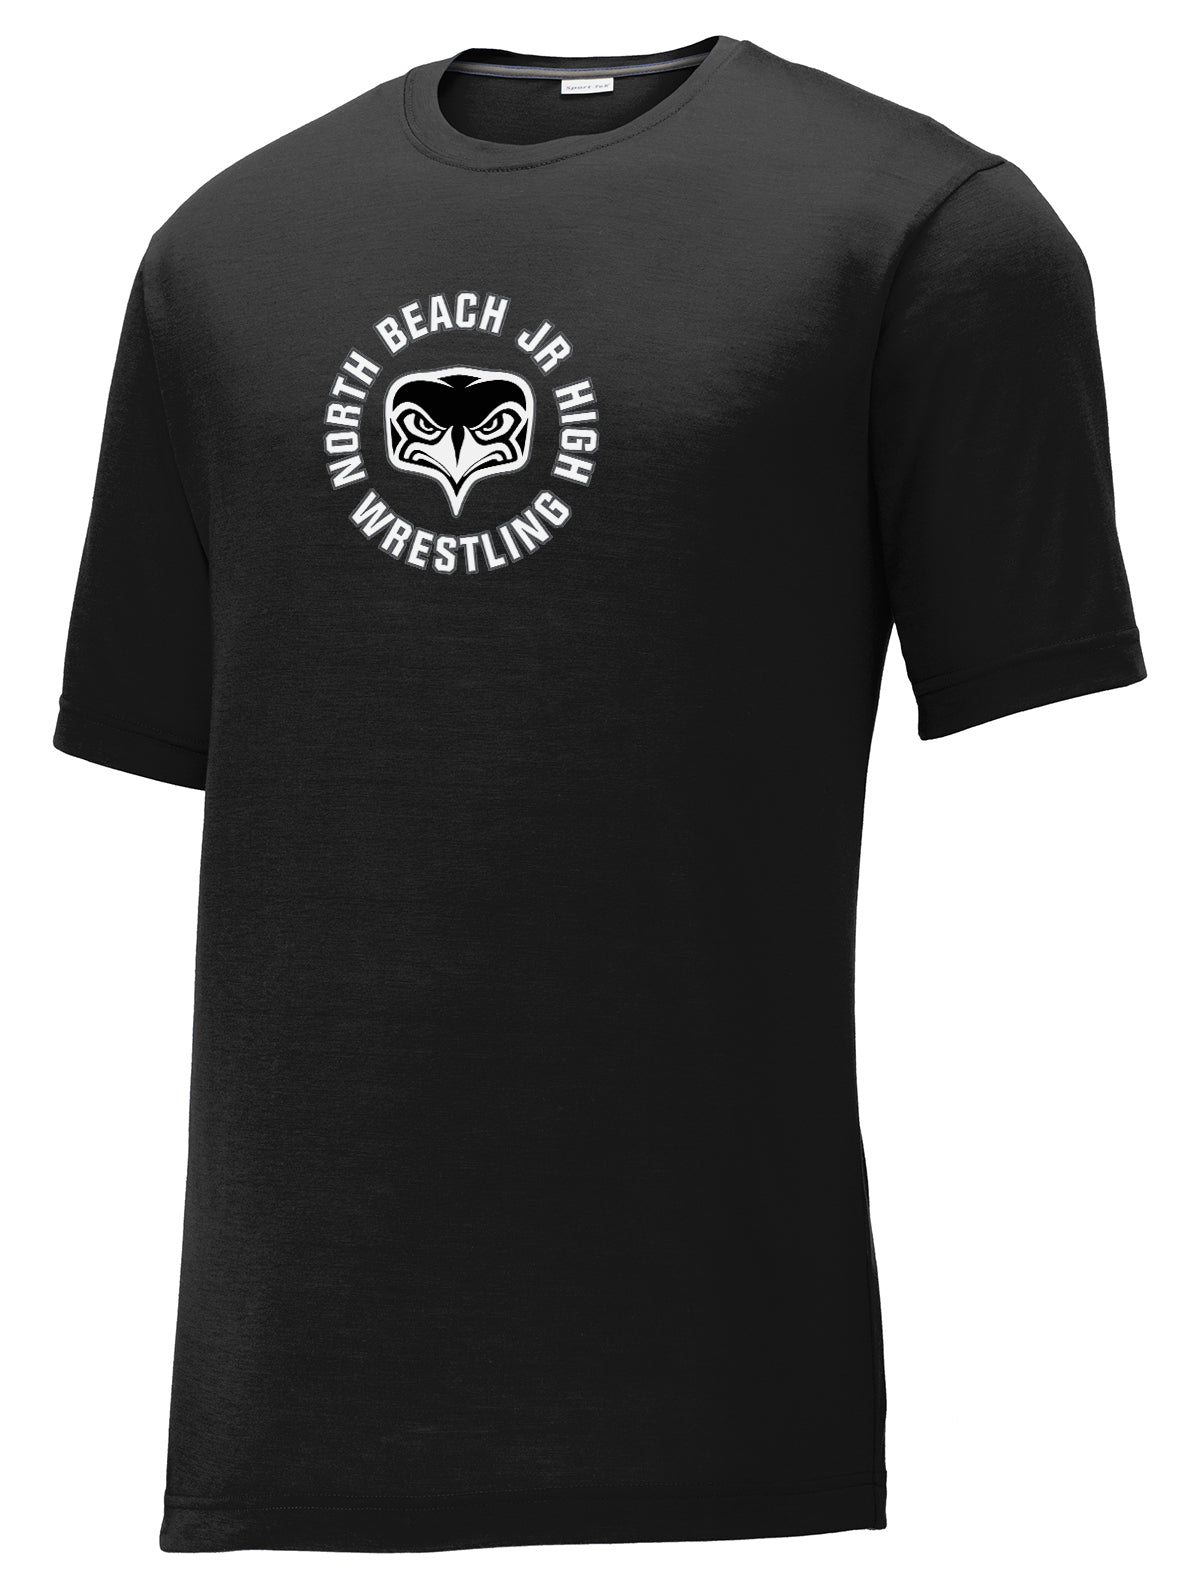 North Beach Jr. High Wrestling CottonTouch Performance T-Shirt